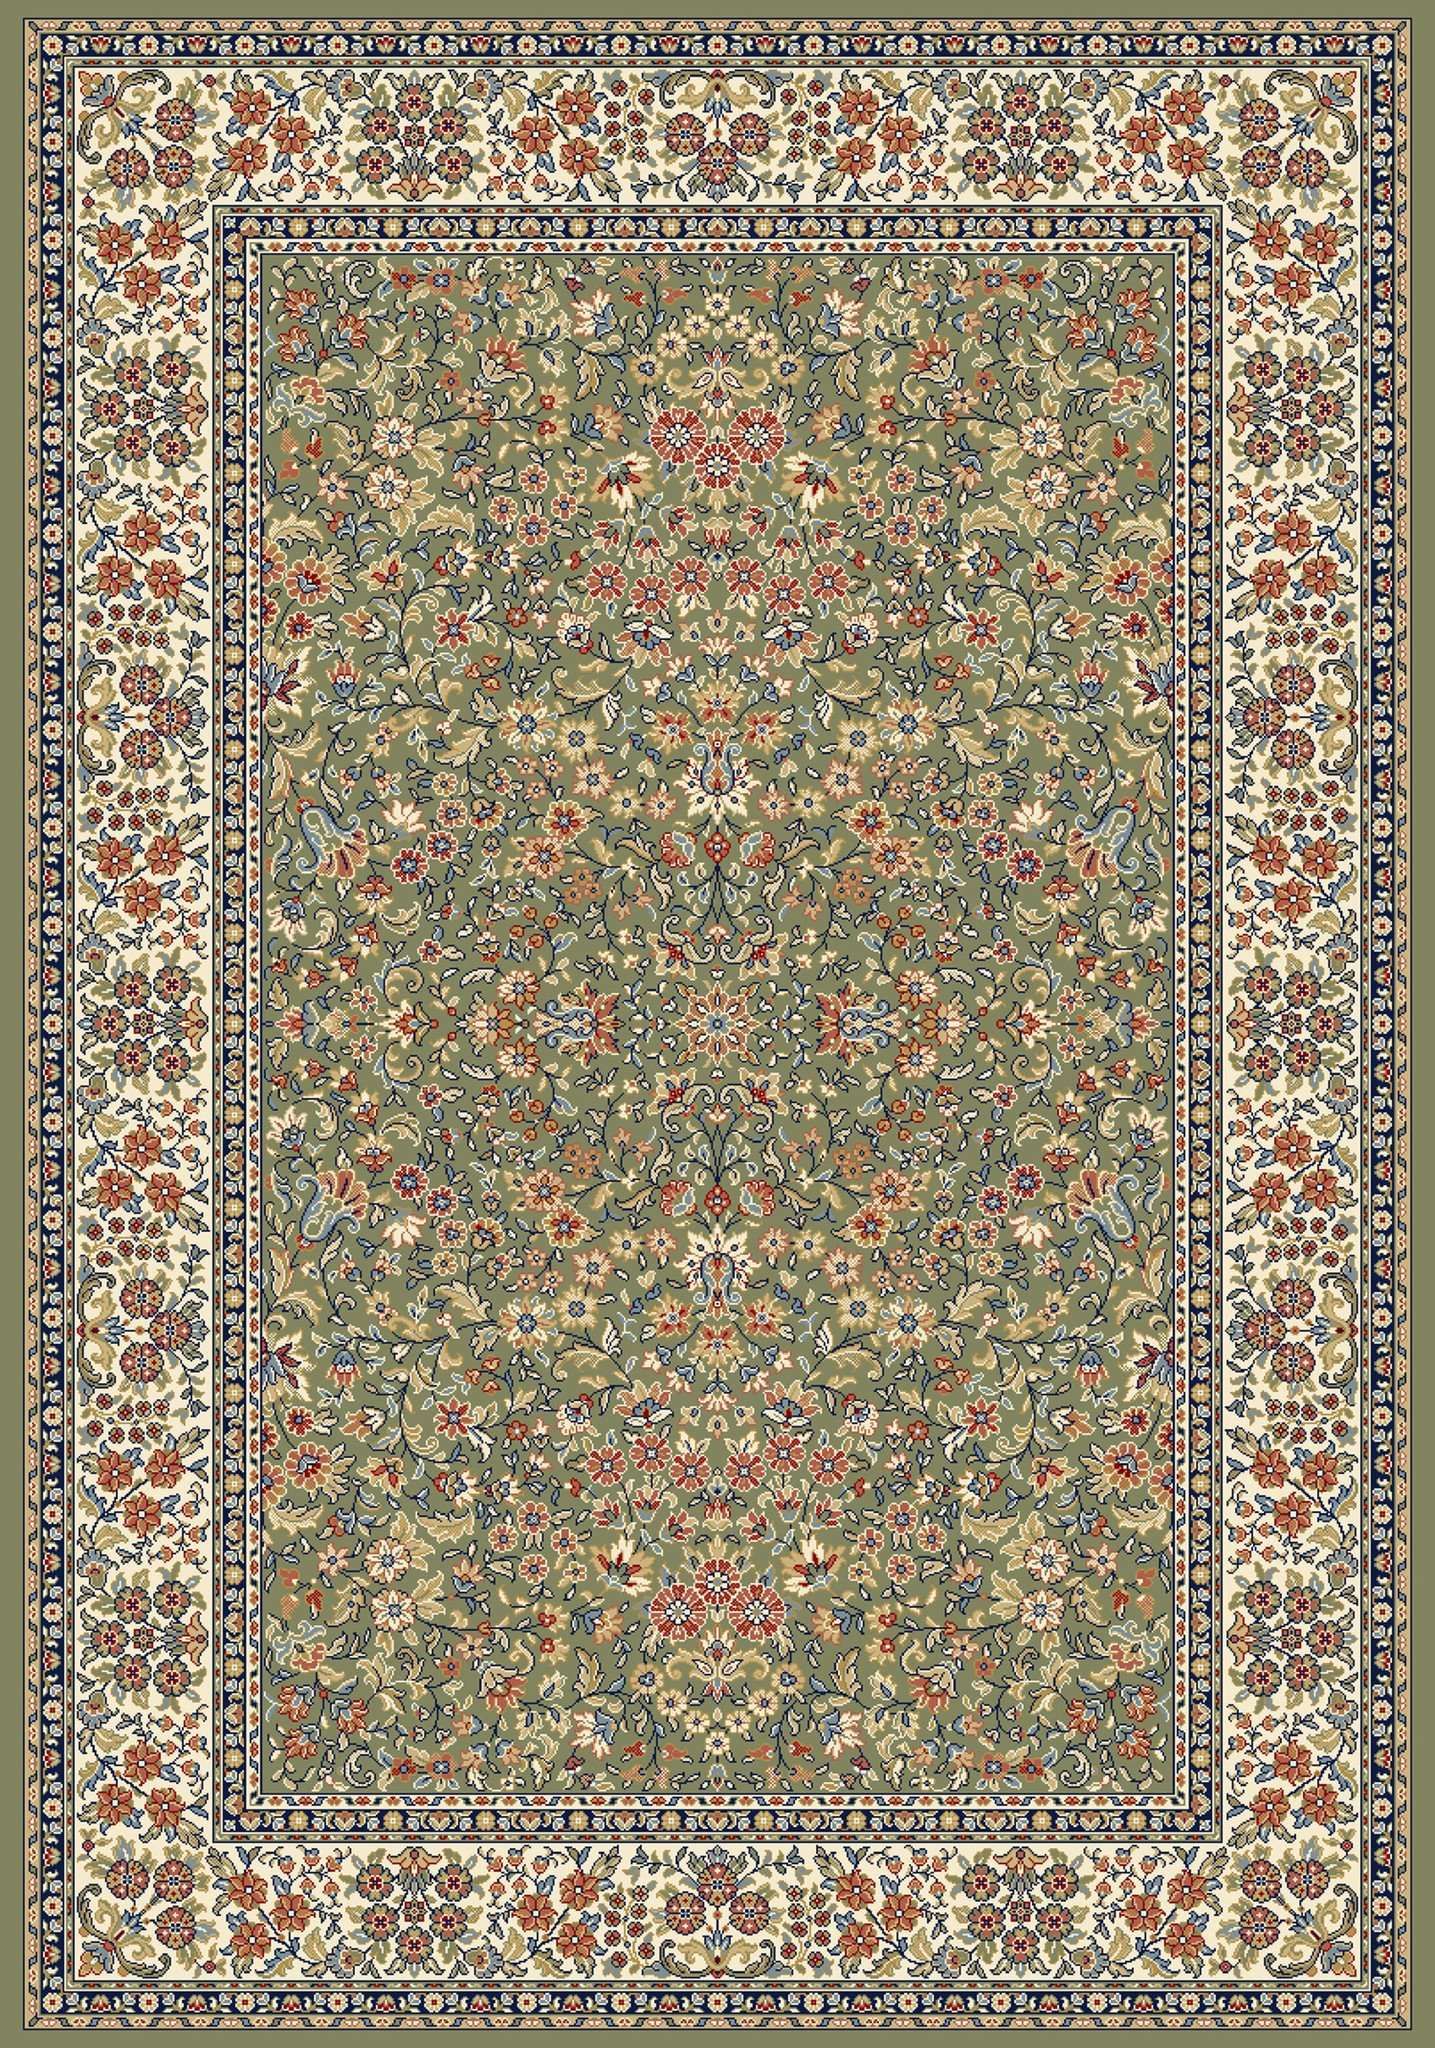 “Persian rug” most beautifull art of
  craft